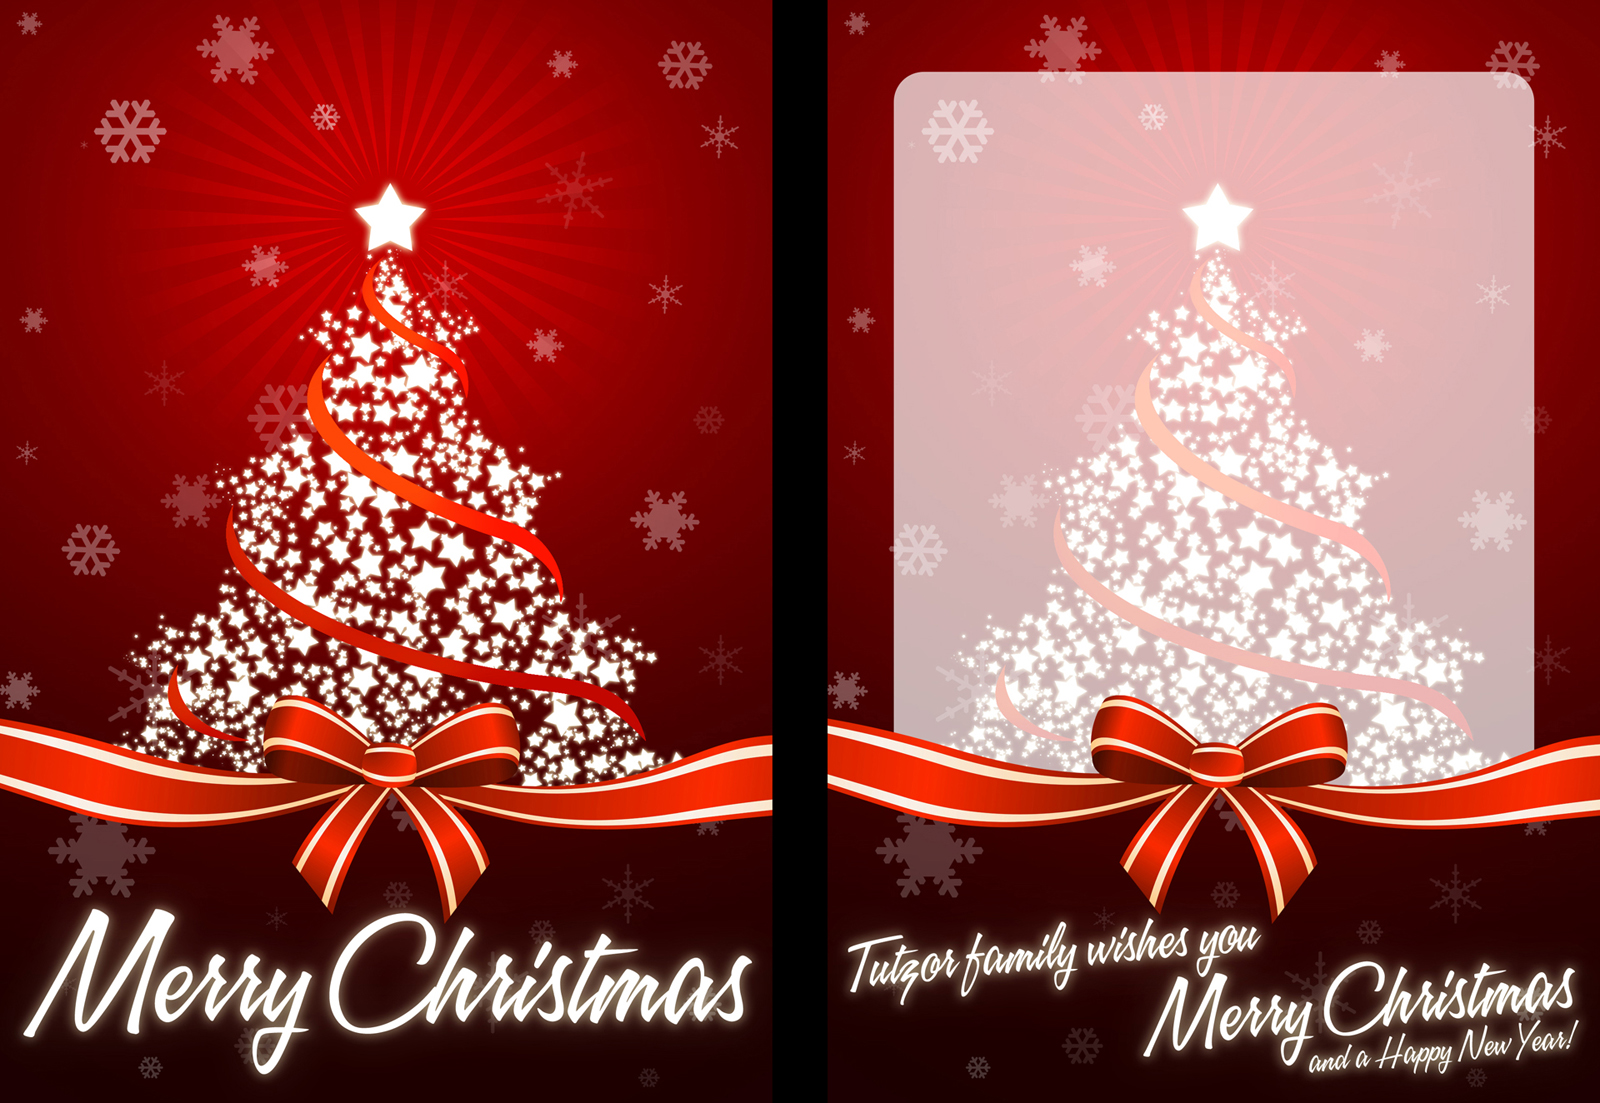 christmas-wishes-photos-cards-christmaswishes123